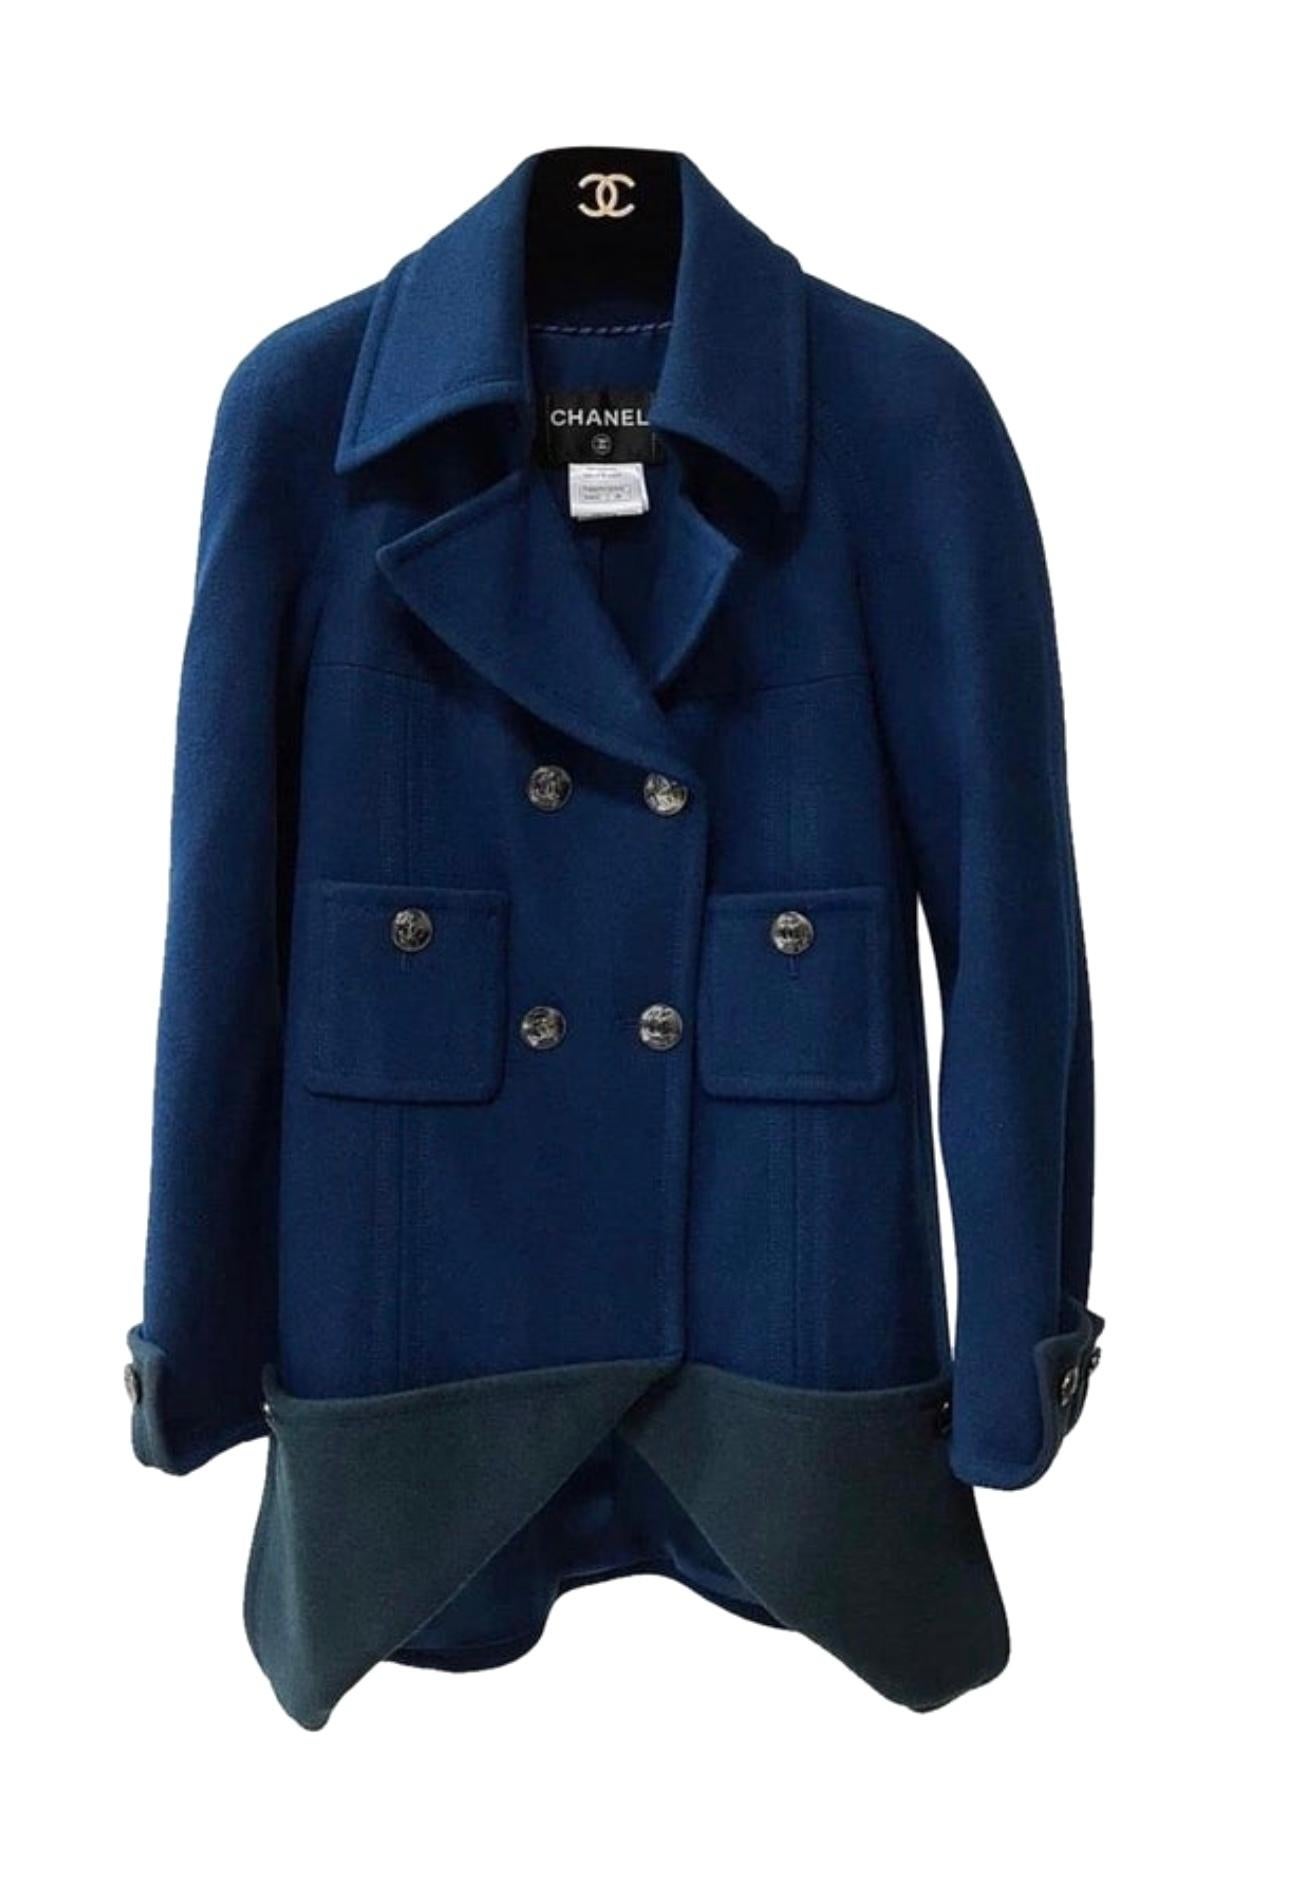 Chanel Cara Delevingne Style Runway Jacket For Sale 8